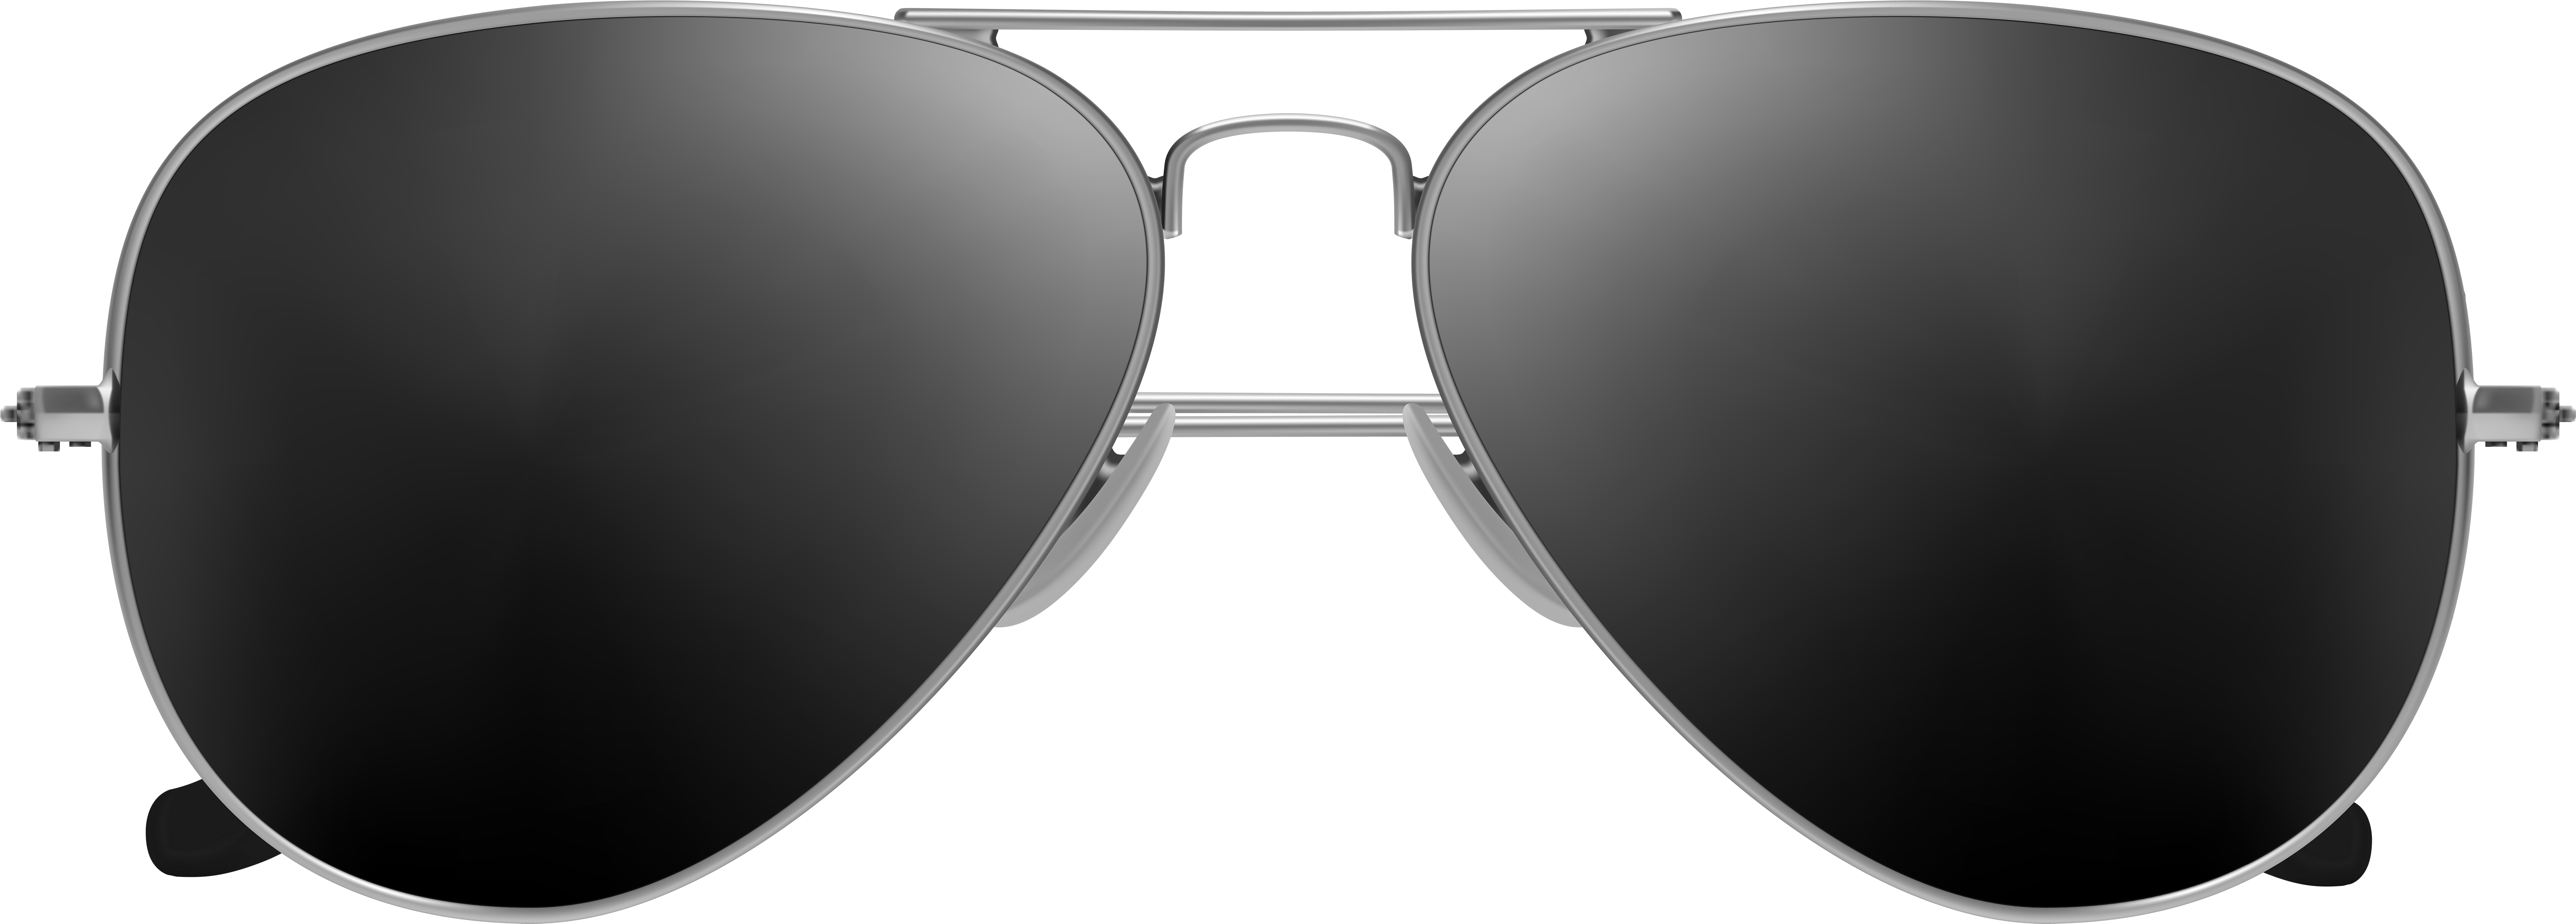 Aviator Glasses Png | rededuct.com